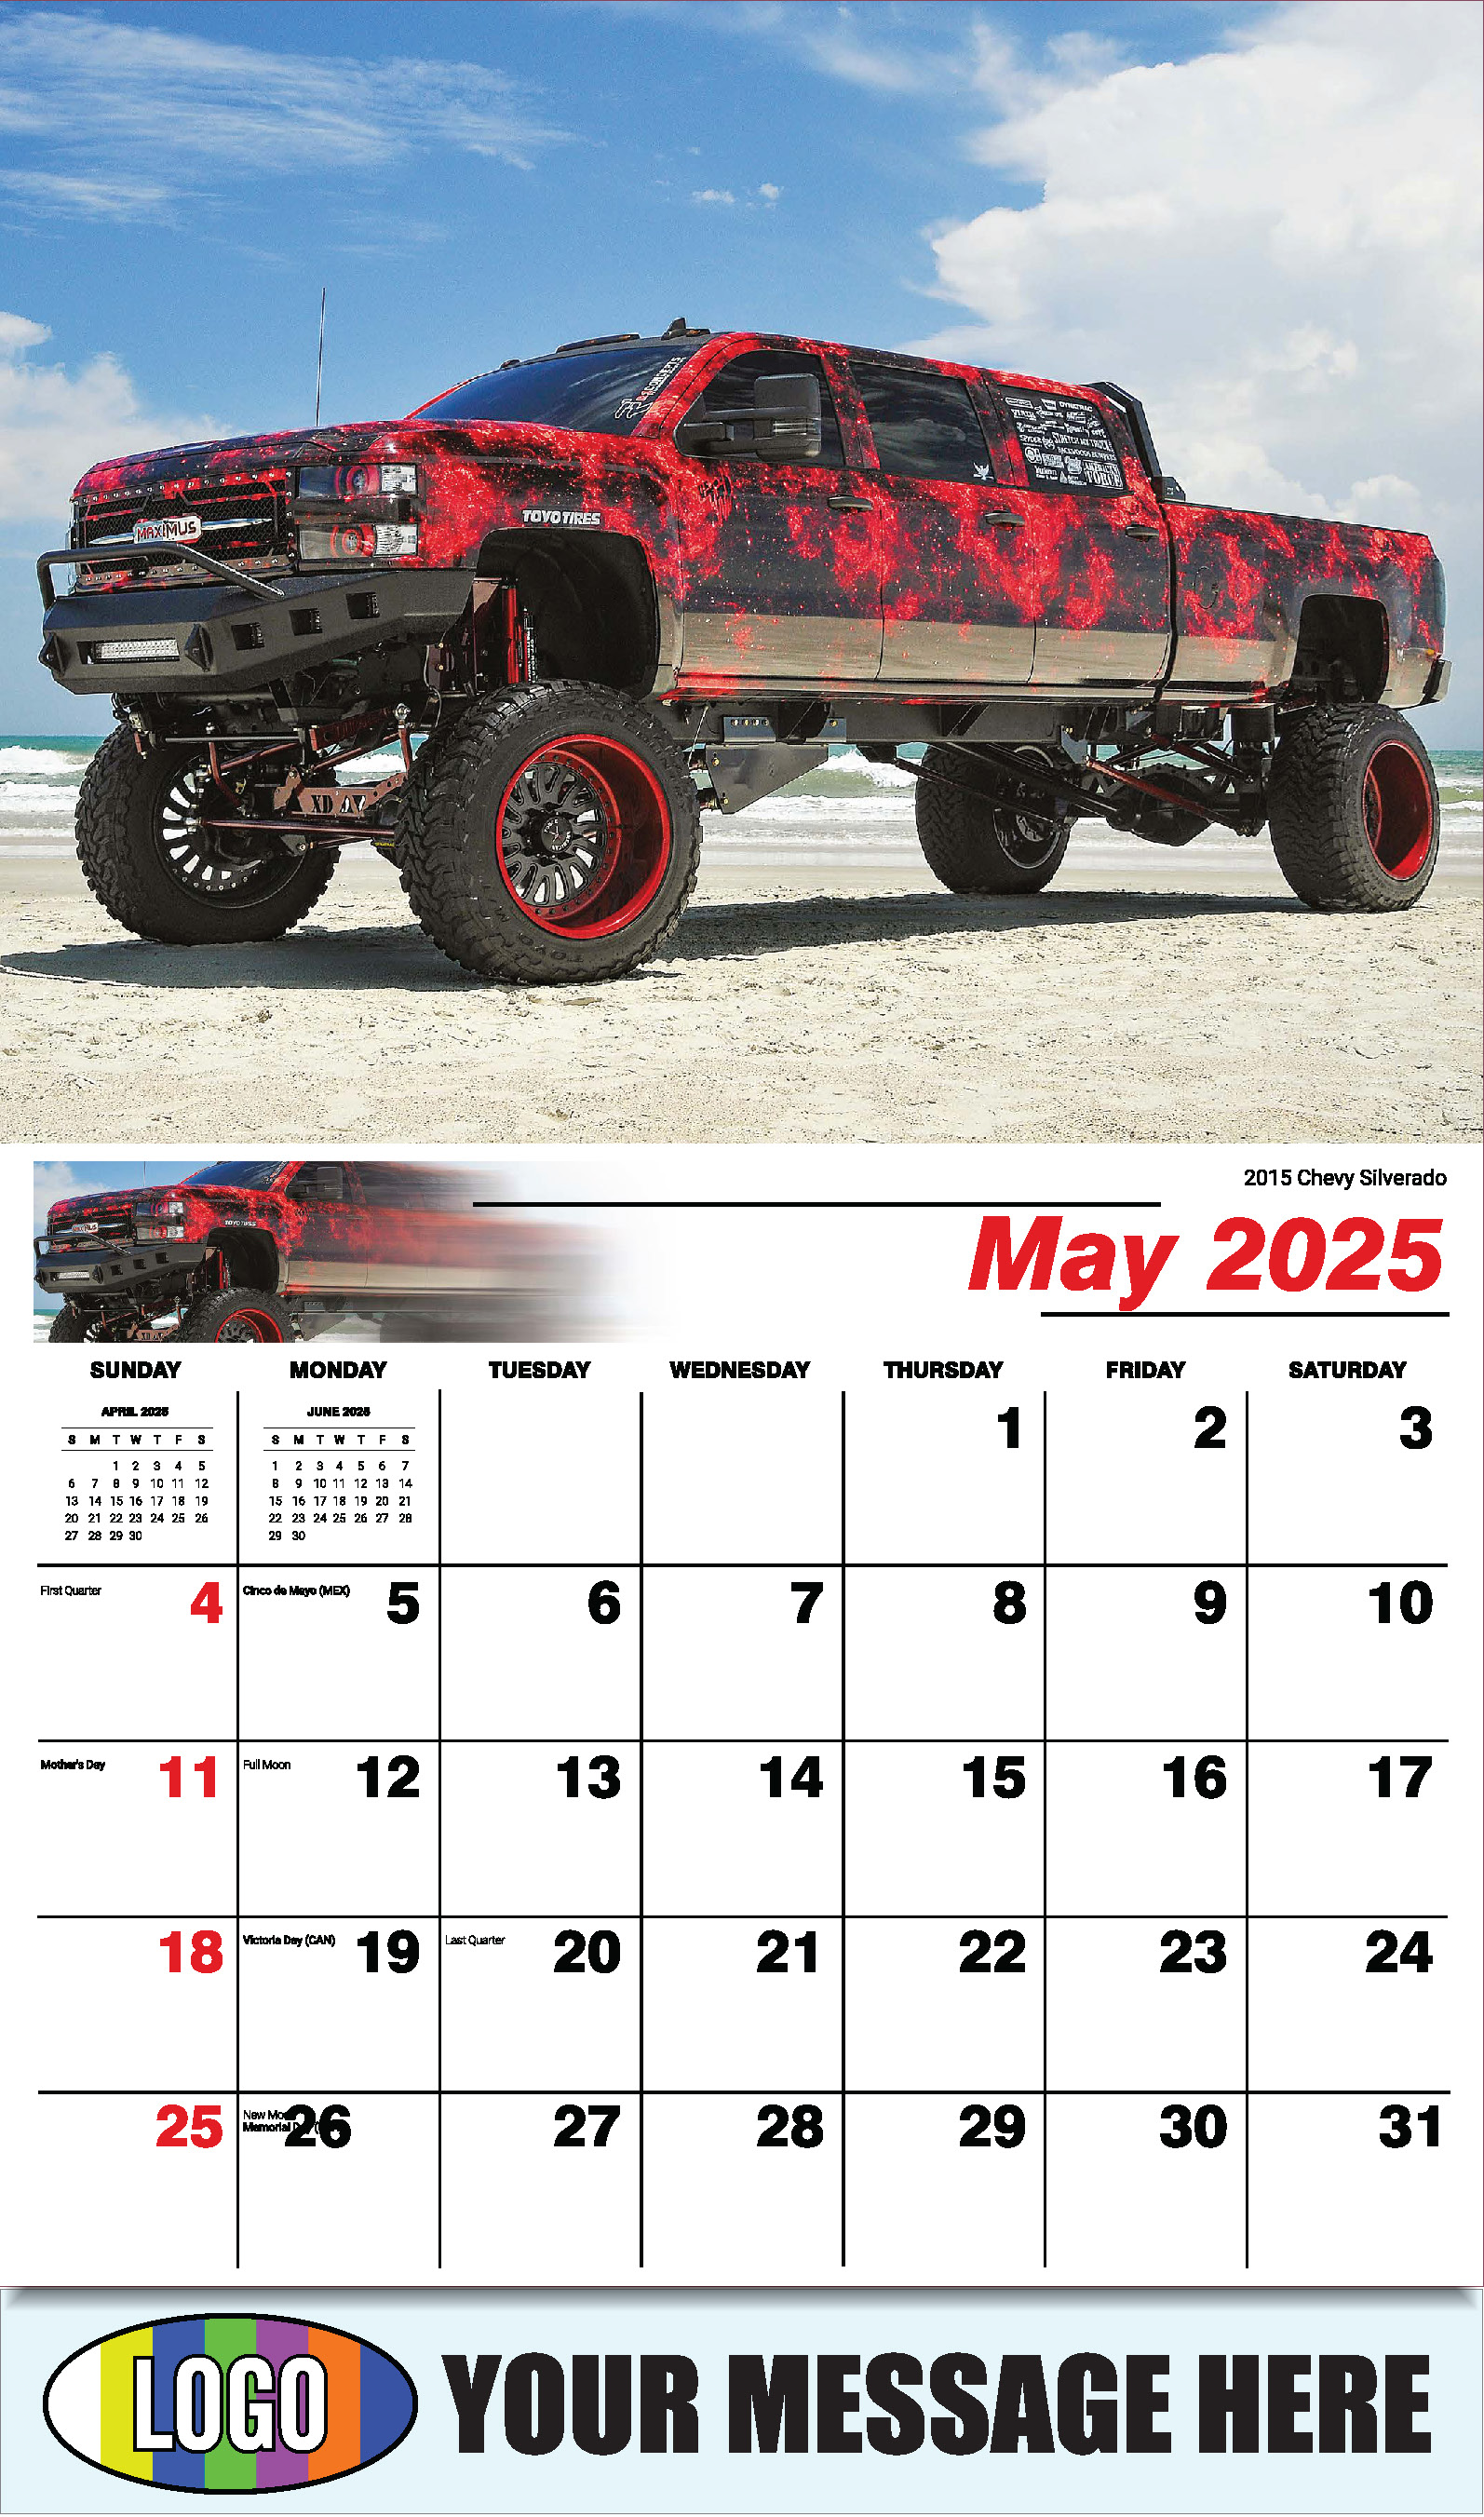 Pumped-Up Pickups 2025 Automotive Business Promo Calendar - May